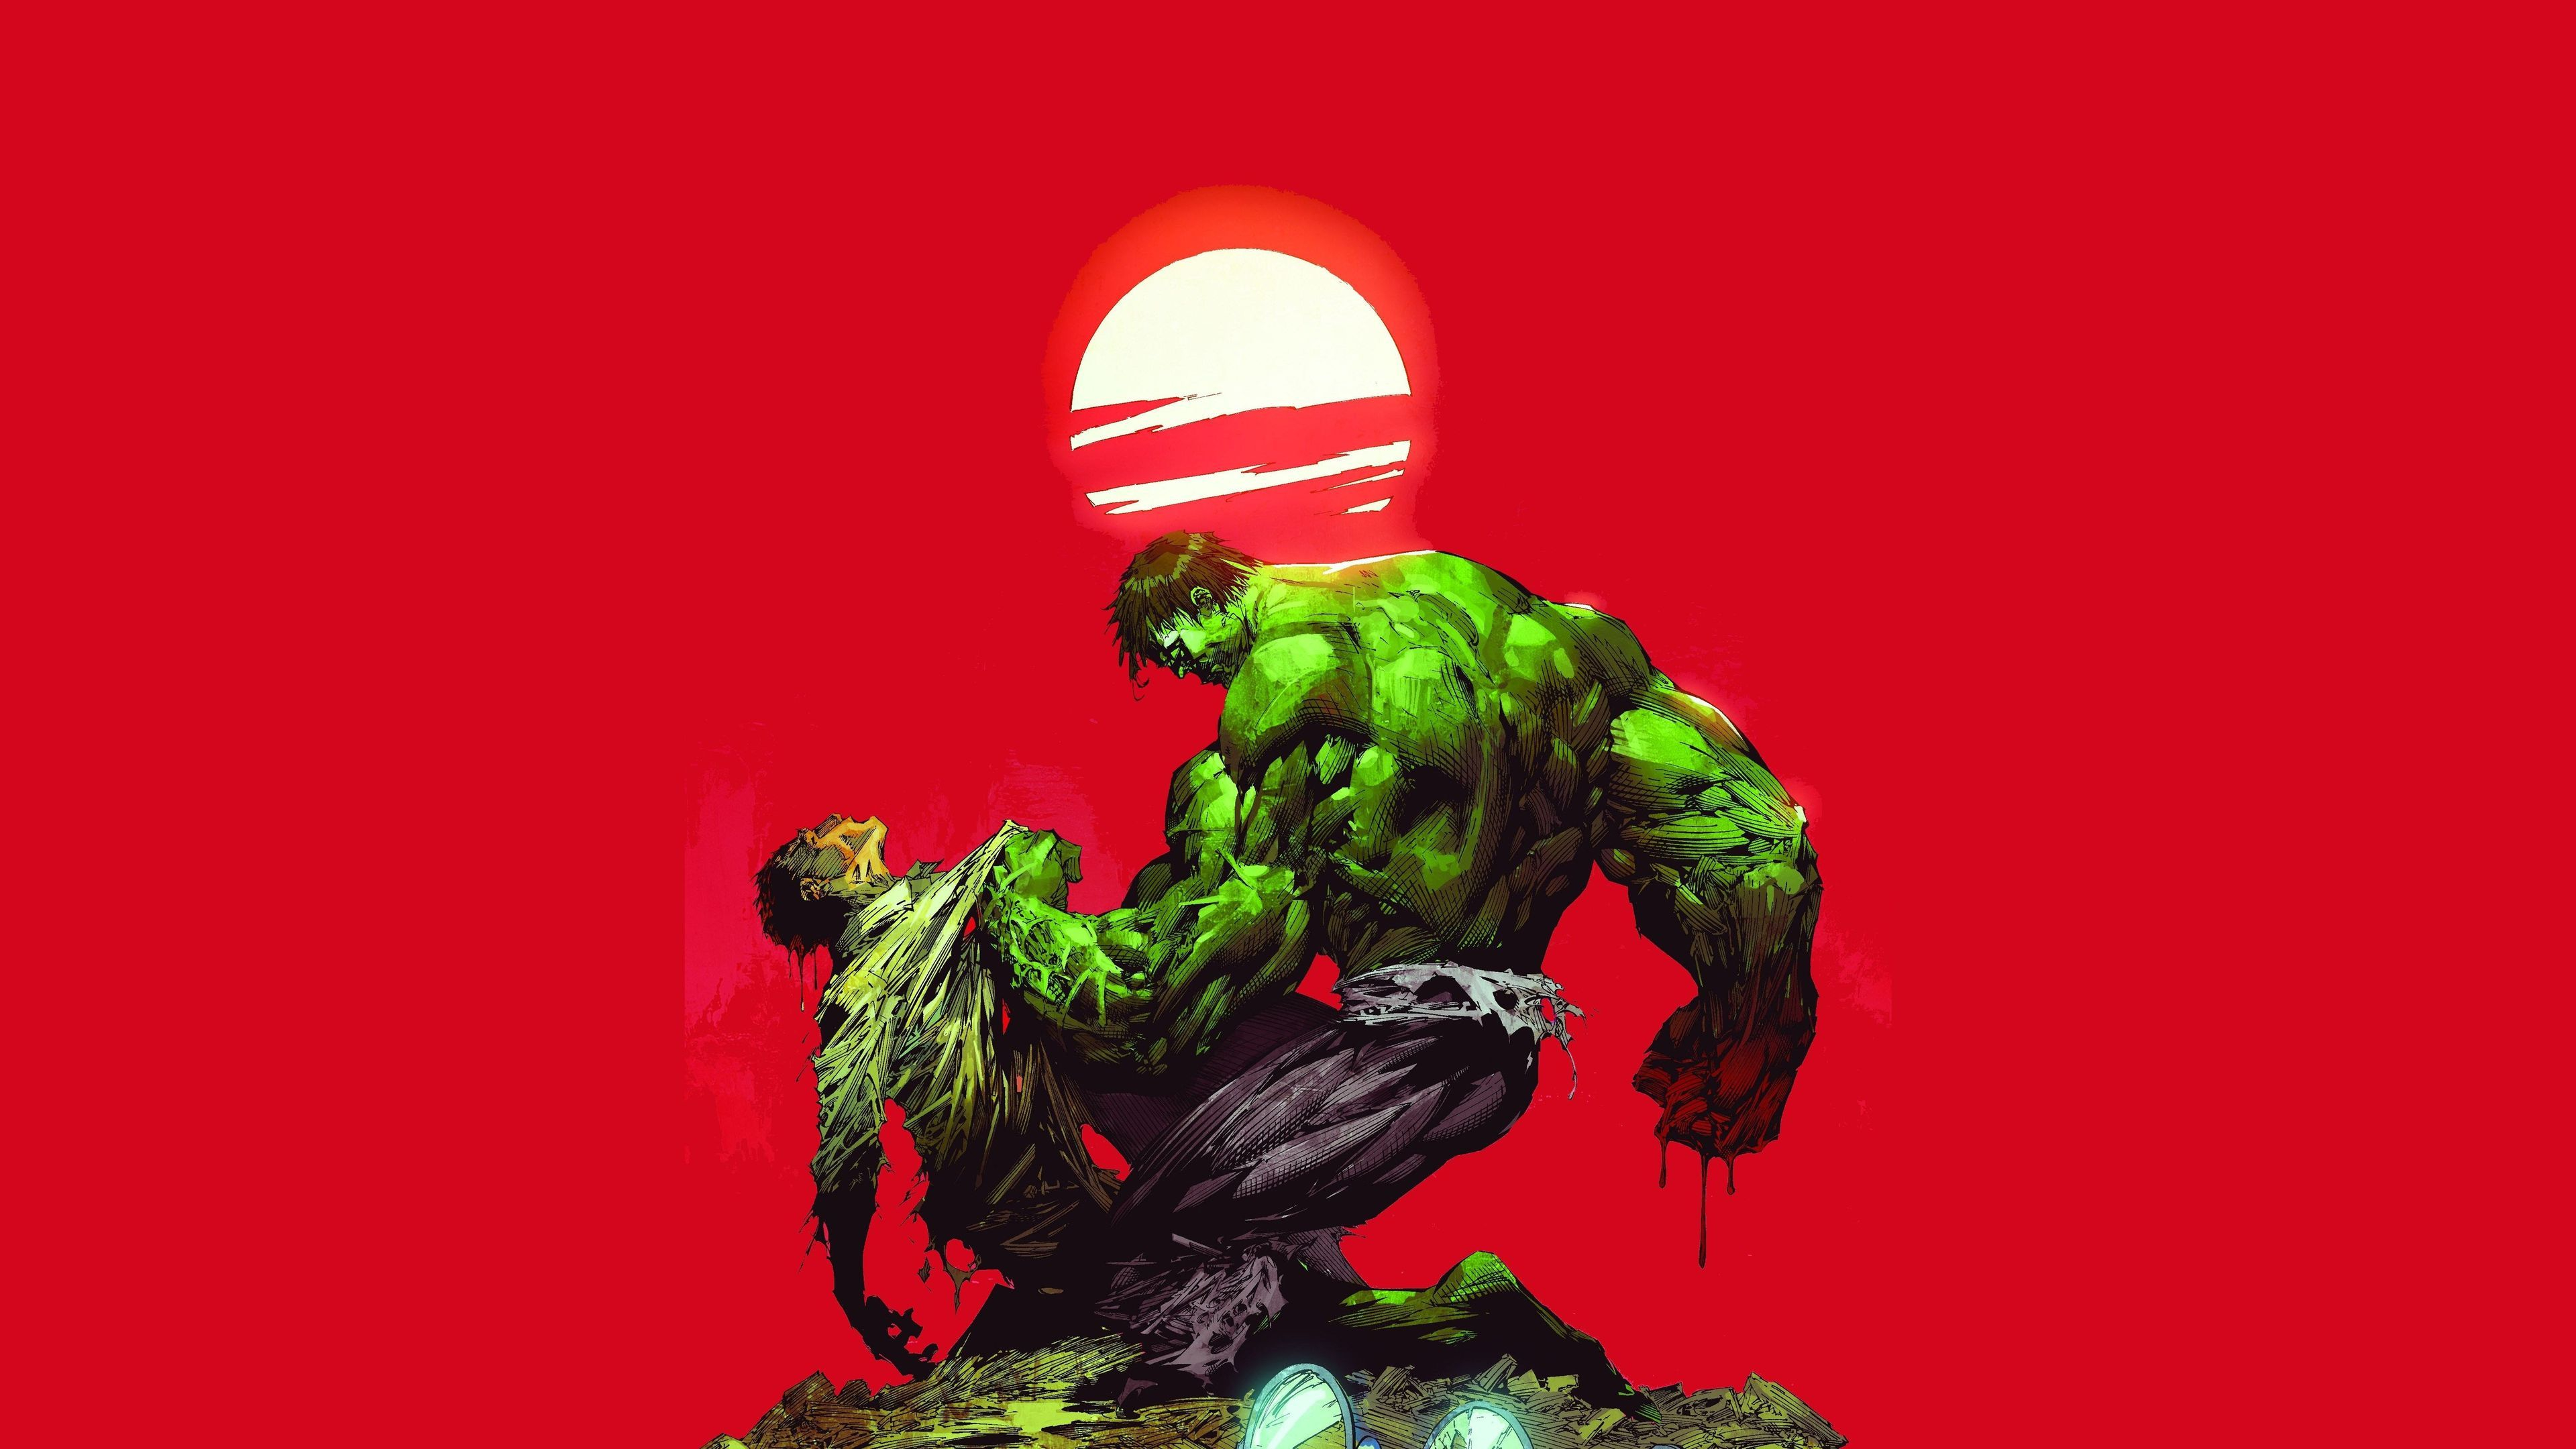 3840x2160 Bruce Banner Vs The Hulk 4k superheroes wallpapers, hulk wallpapers, hd- wallpapers, 5k wallpapers, 4k-wallpapers | Hero wallpaper, Wallpaper, Bruce banner